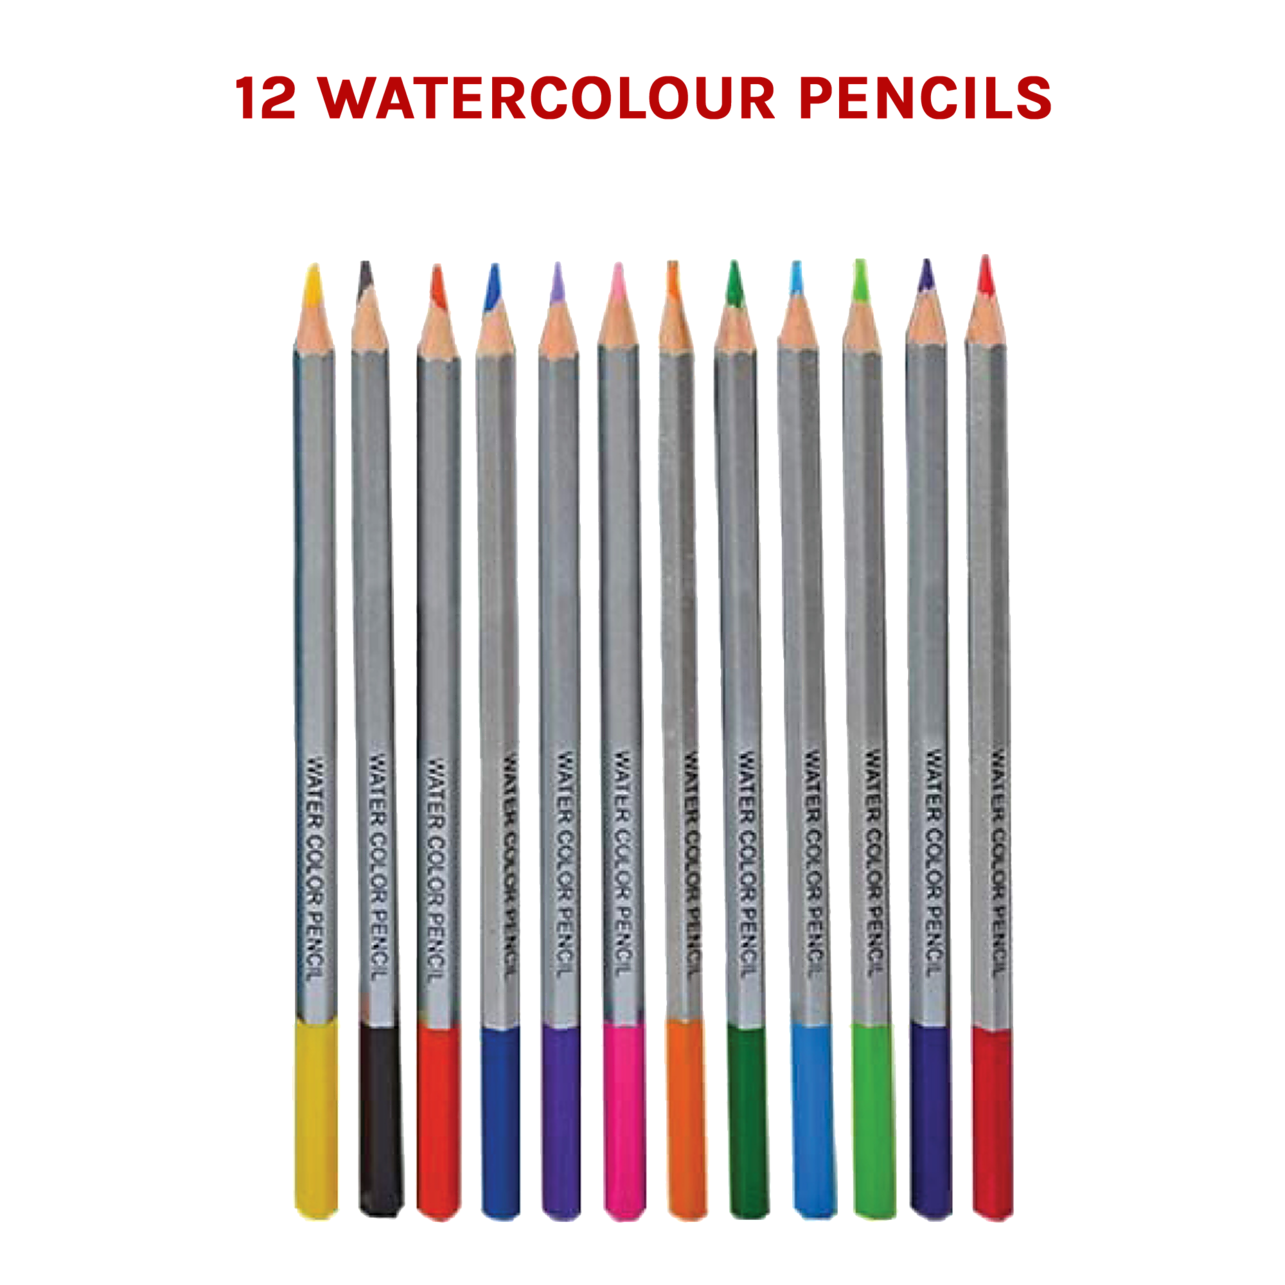 Art Sketch Pencils Drawing Set - 72pcs  Australia's DIY, Renovation, Home  and Lifestyle Store